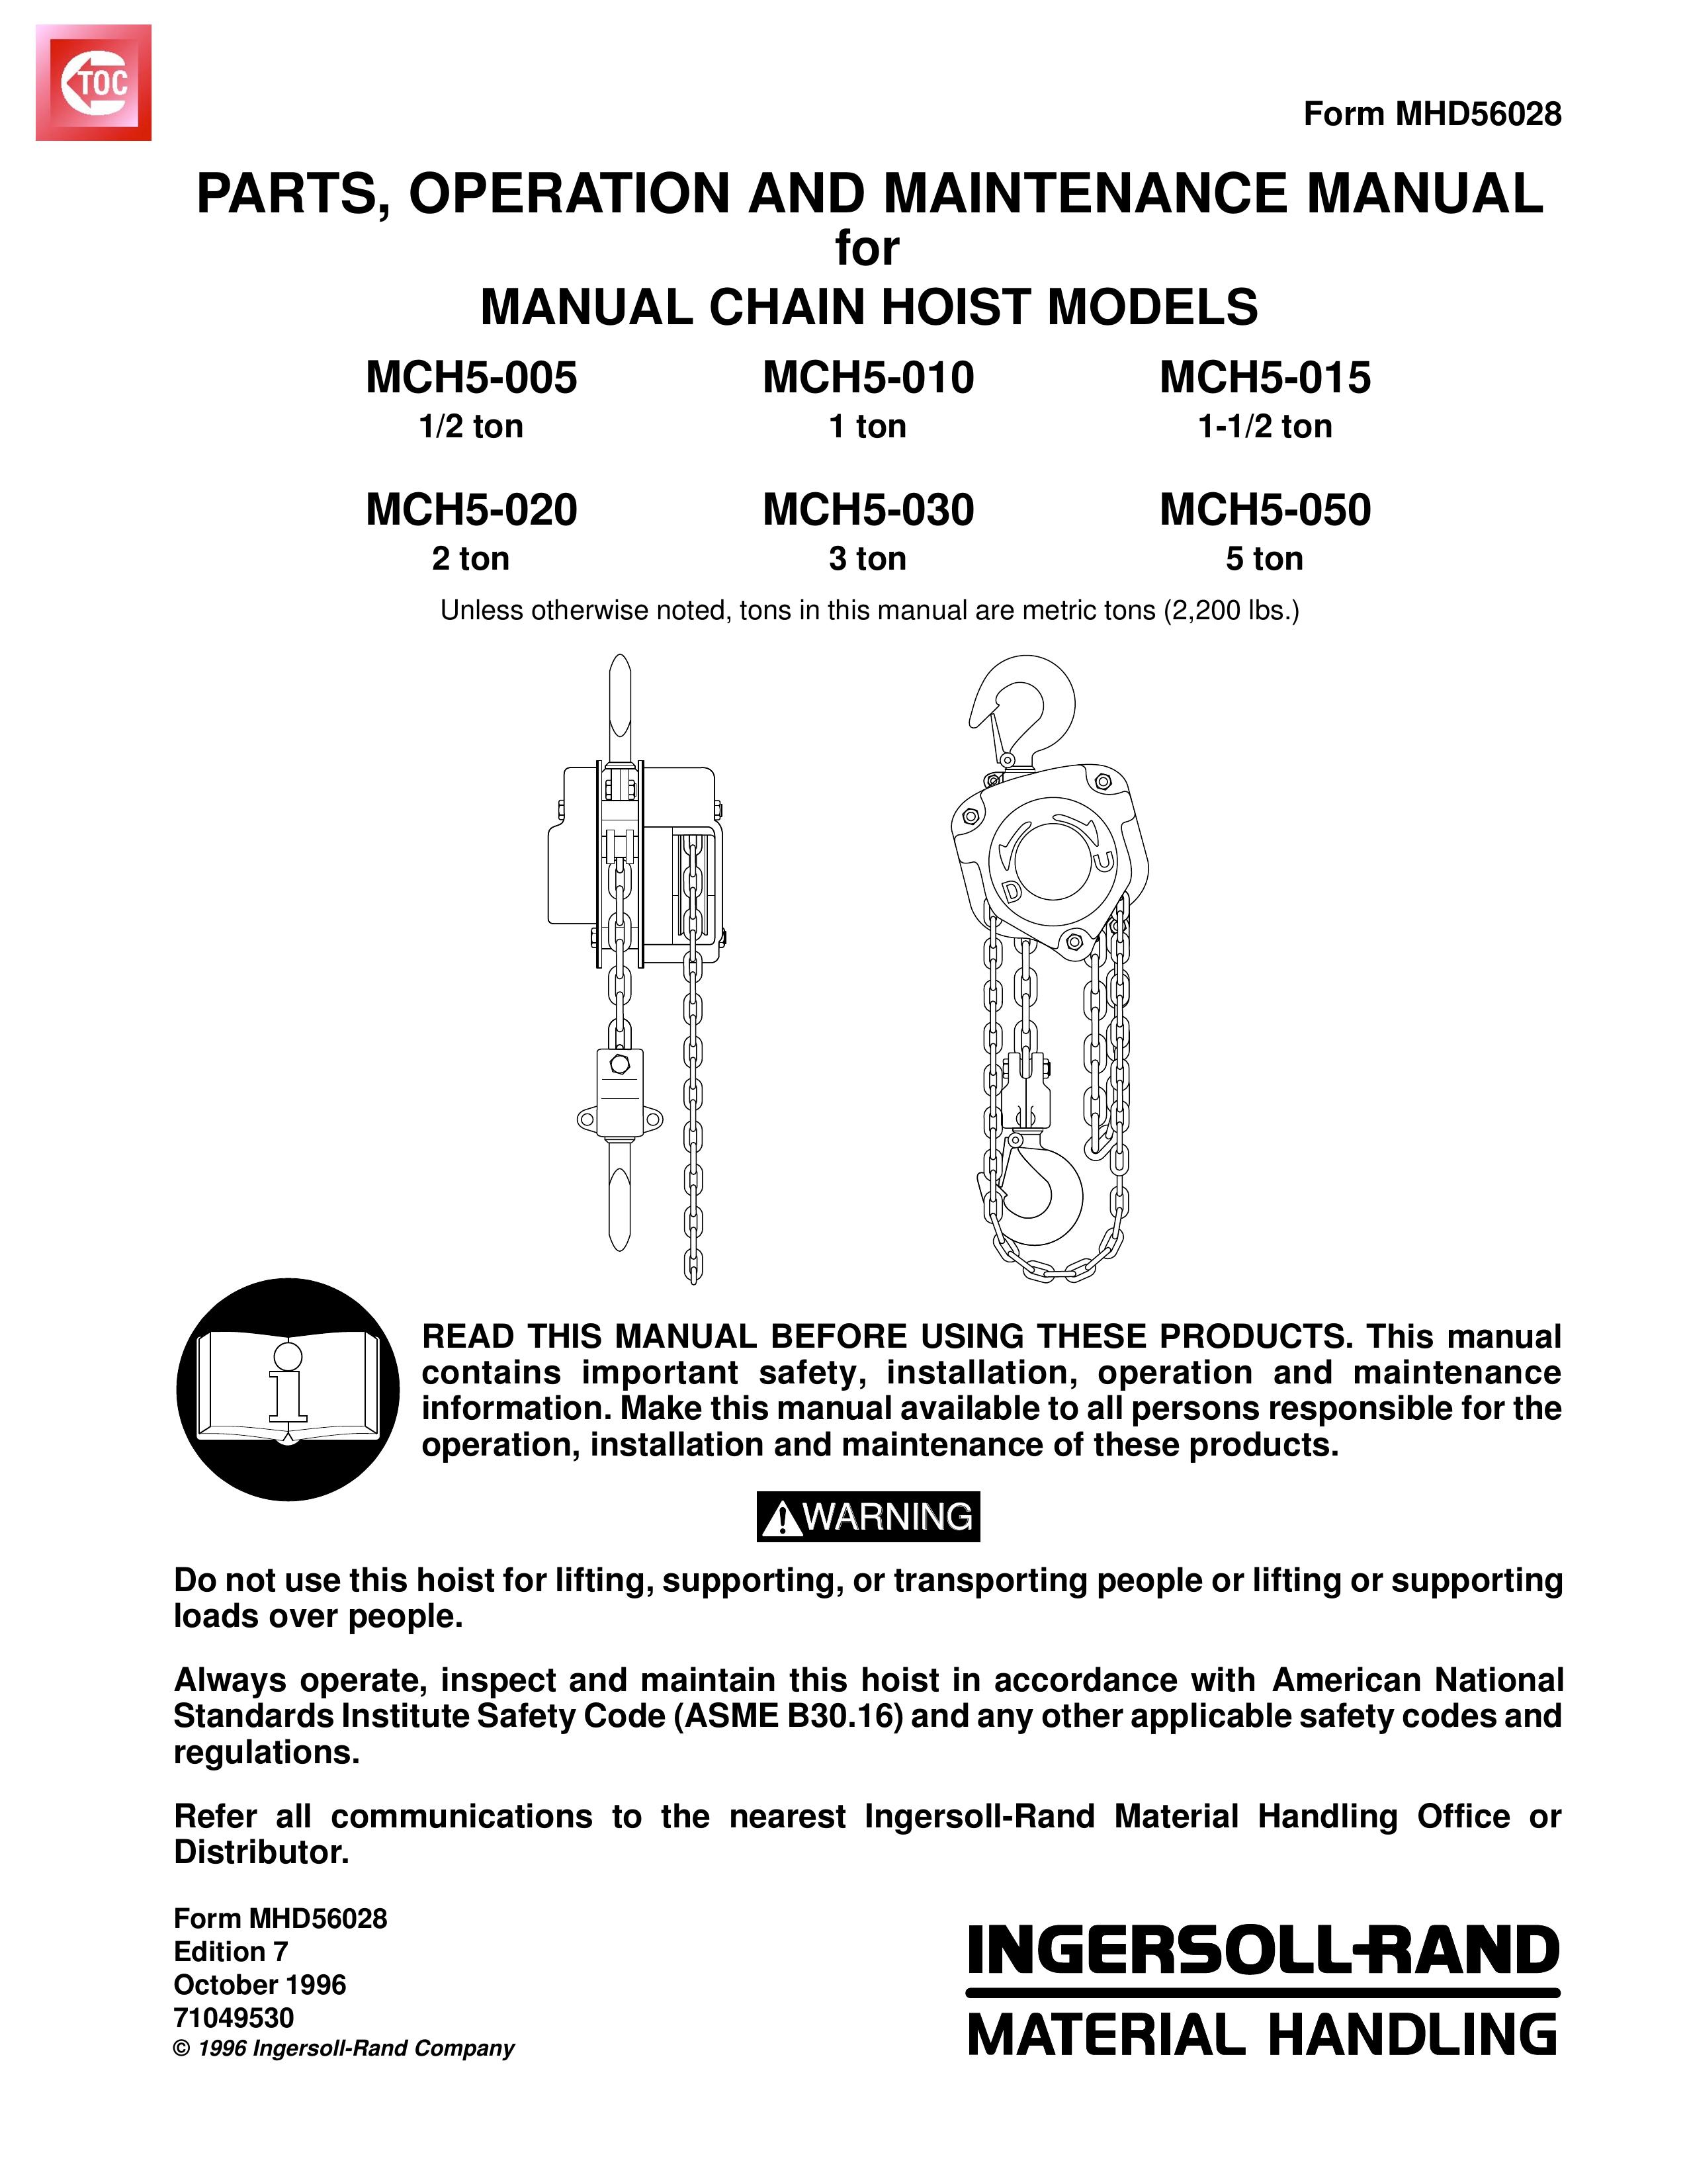 Ingersoll-Rand MCH5-050 Digital Photo Keychain User Manual